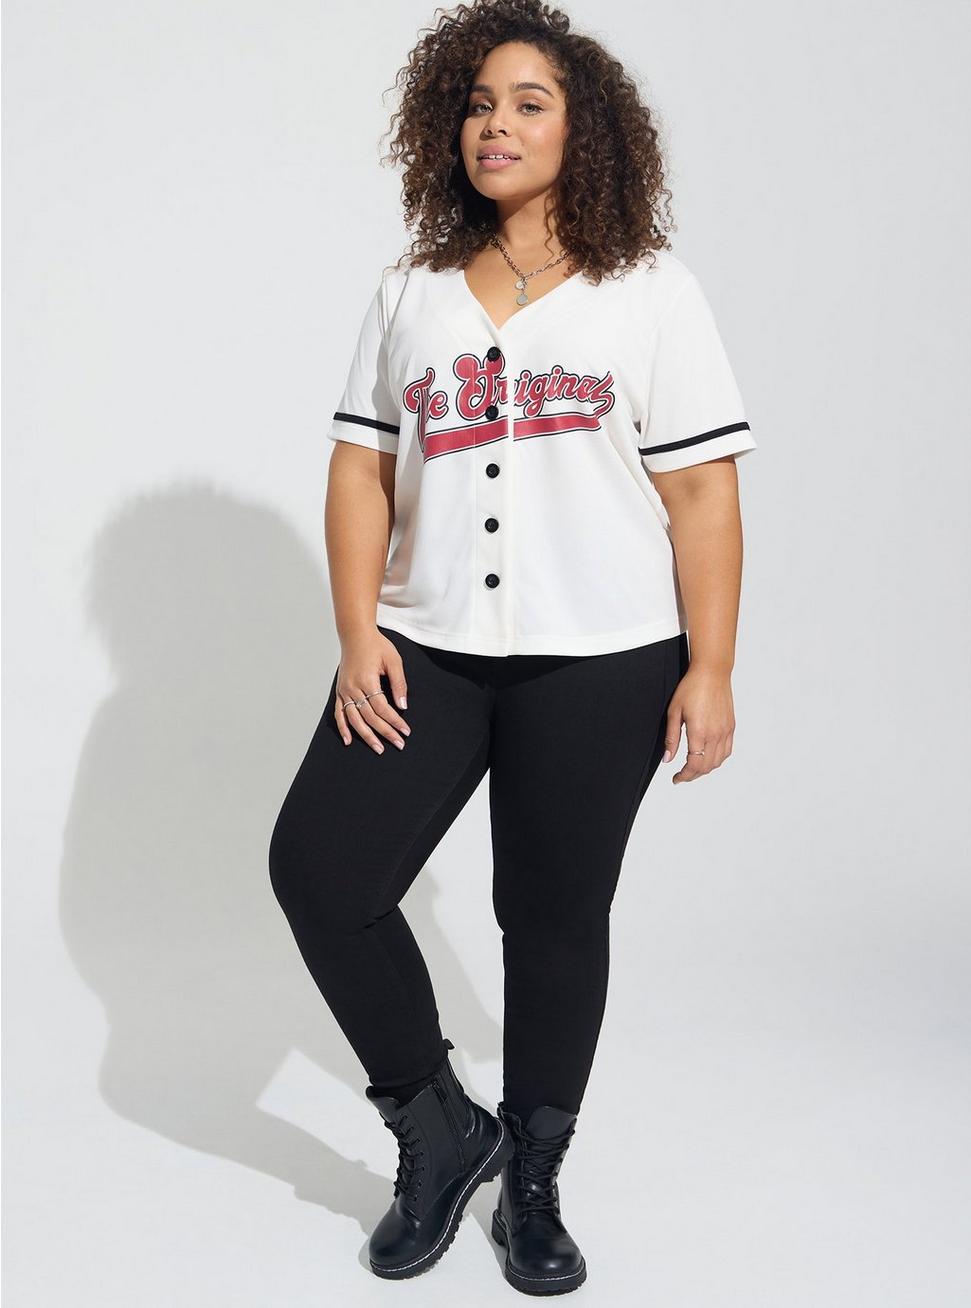 baseball jersey outfit ideas